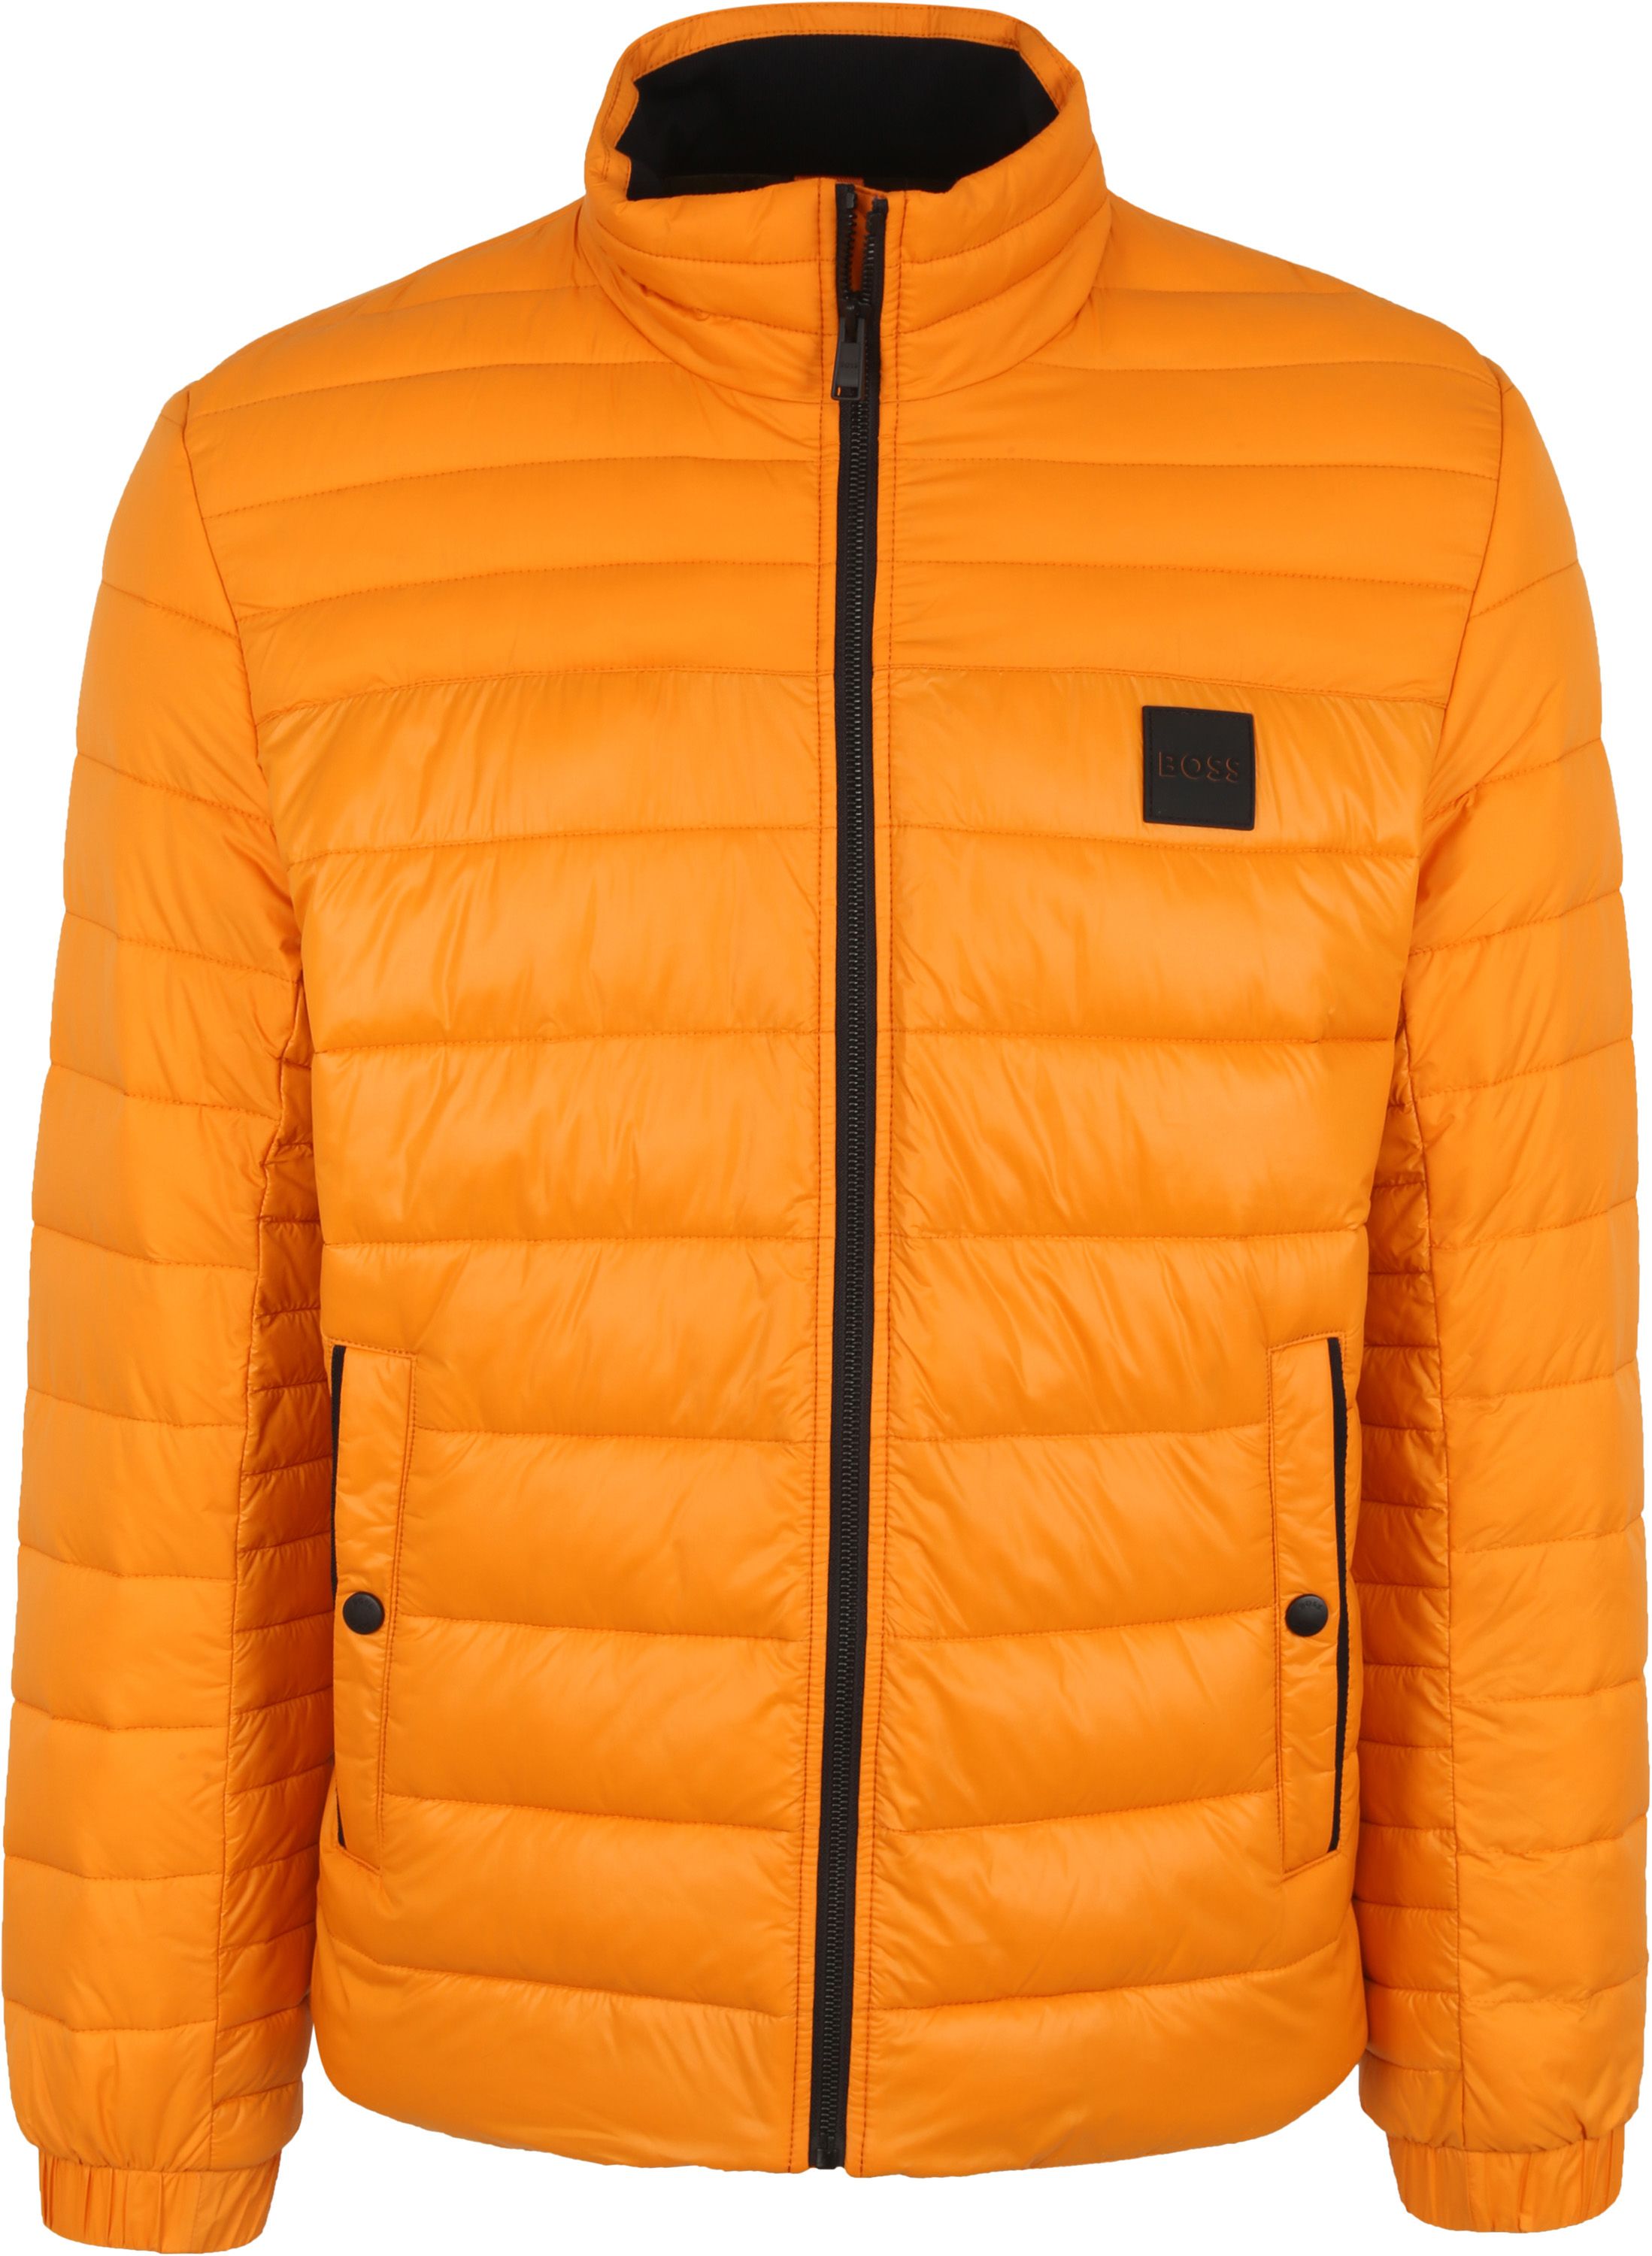 Hugo Boss Oden Jacket Orange size 40-R